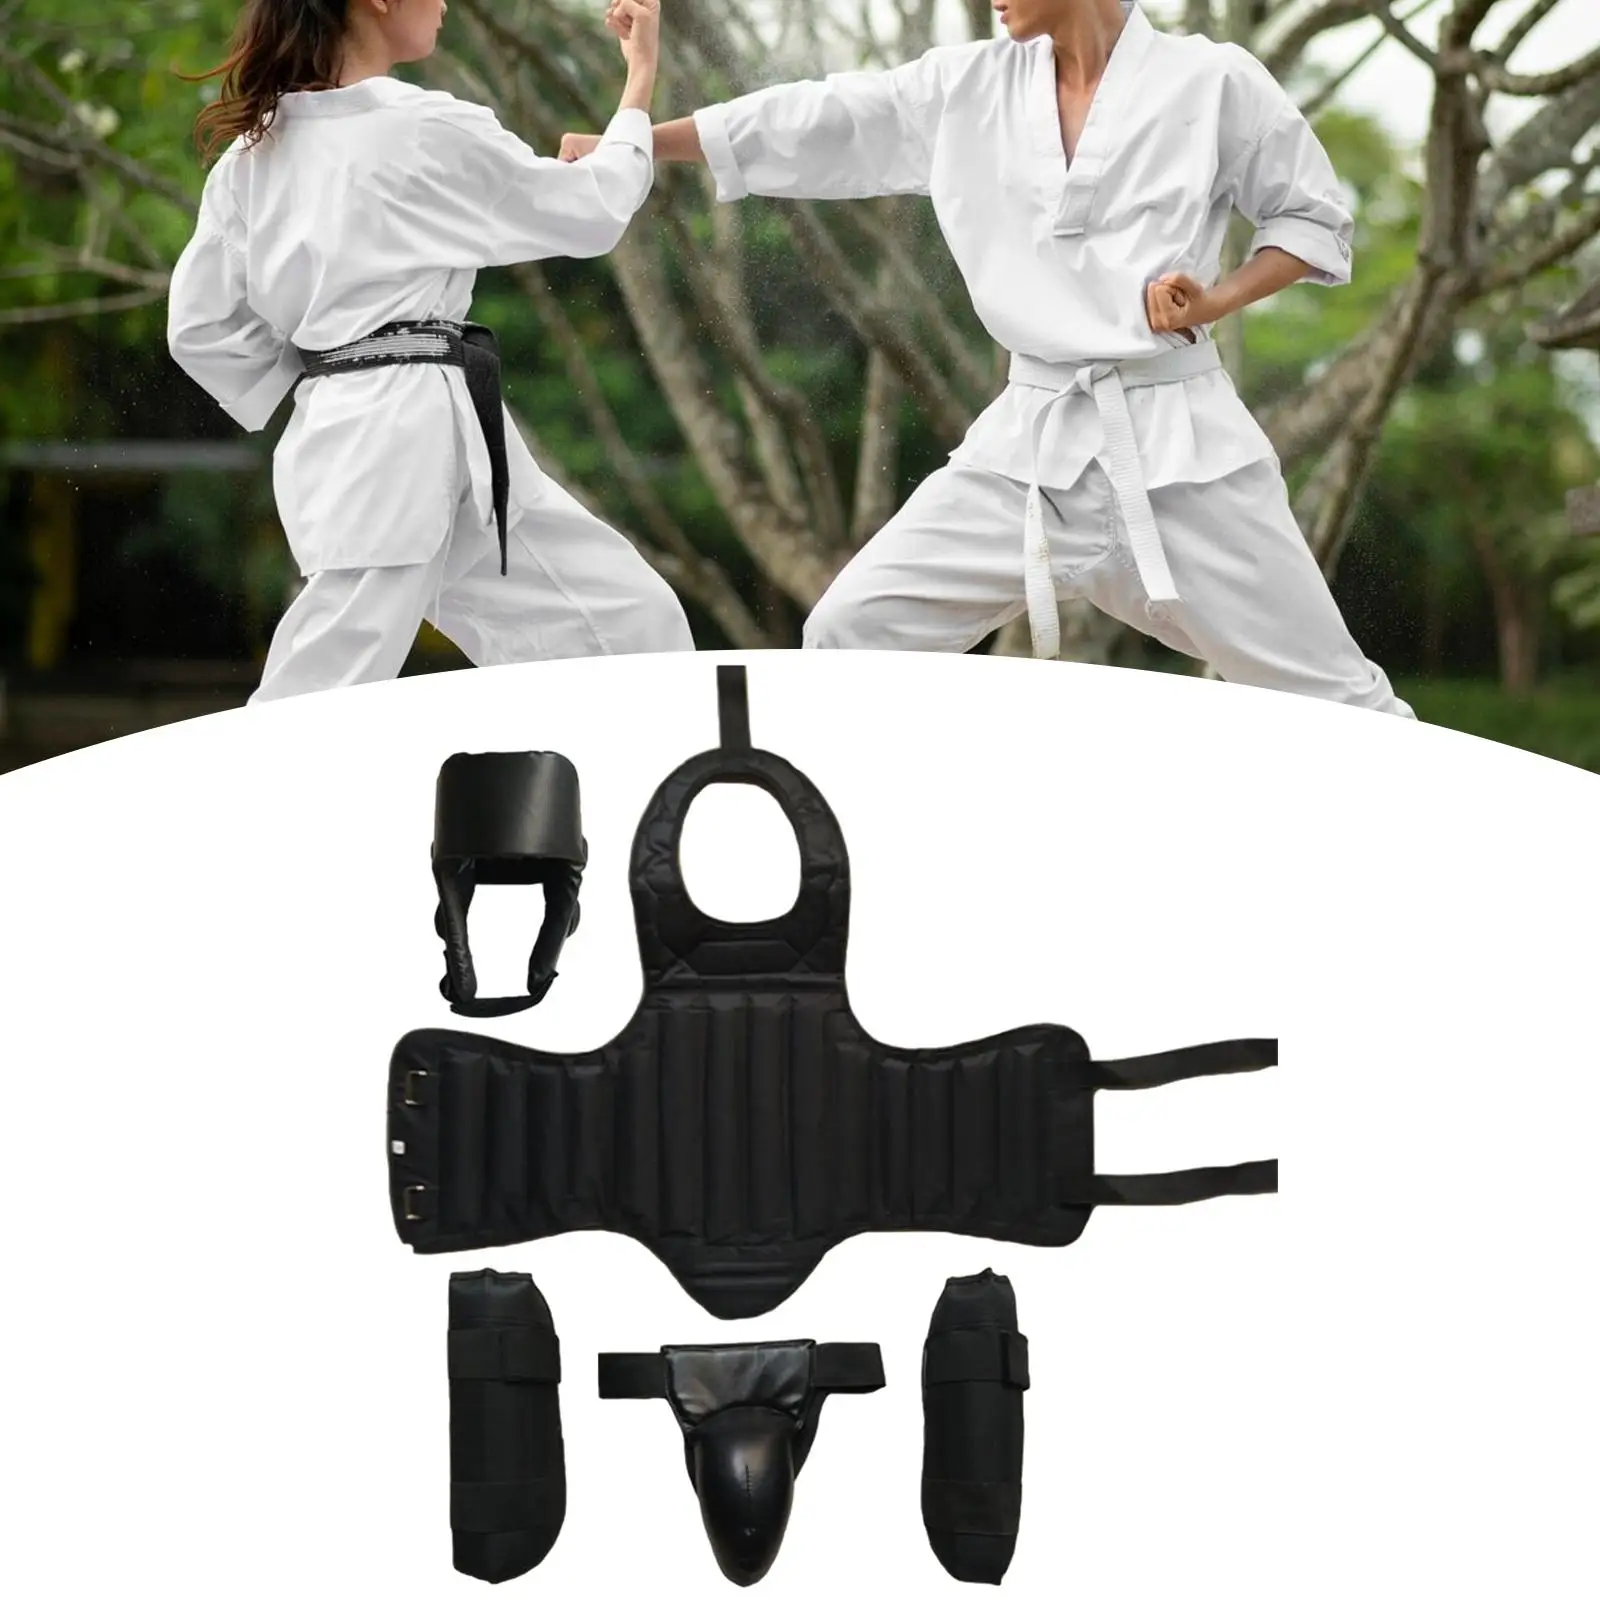 Sparring Protective Gear Sanda Gear Set Men Women Sanda Helmet Boxing Protector Gears for Kick Boxing Taekwondo Martial Arts